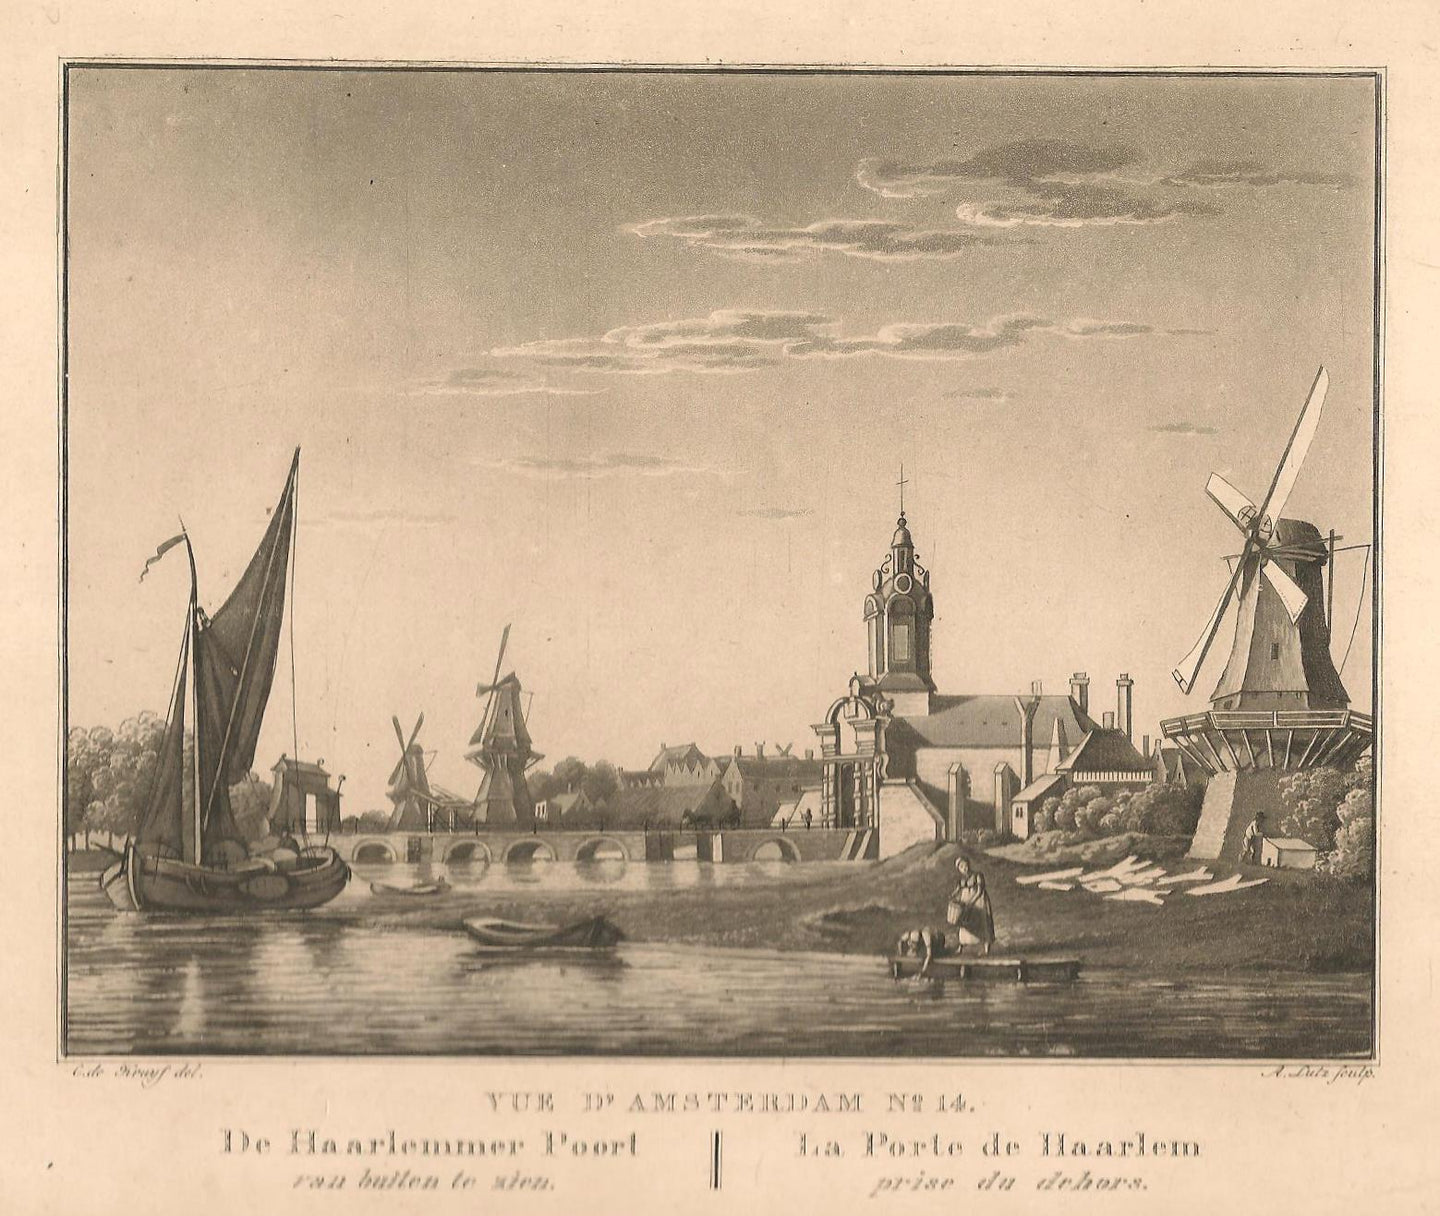 Amsterdam Haarlemmerpoort Singelgracht - C de Kruyff / F Buffa - 1825